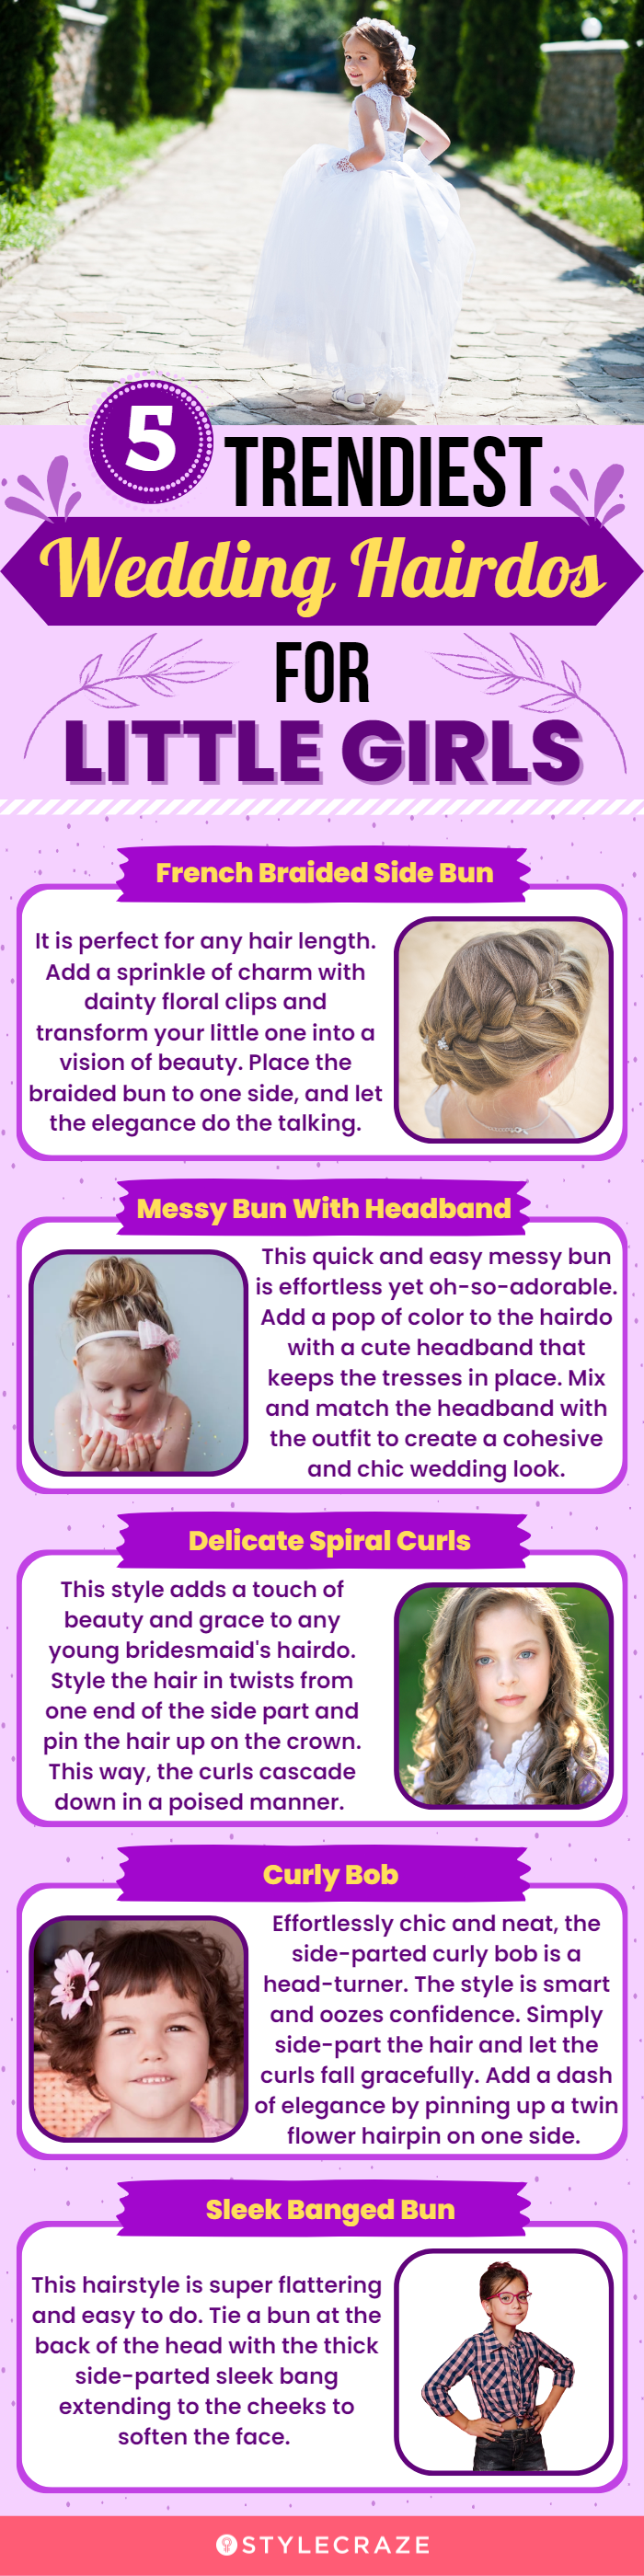 5 trendiest wedding hairdos for little girls (infographic)